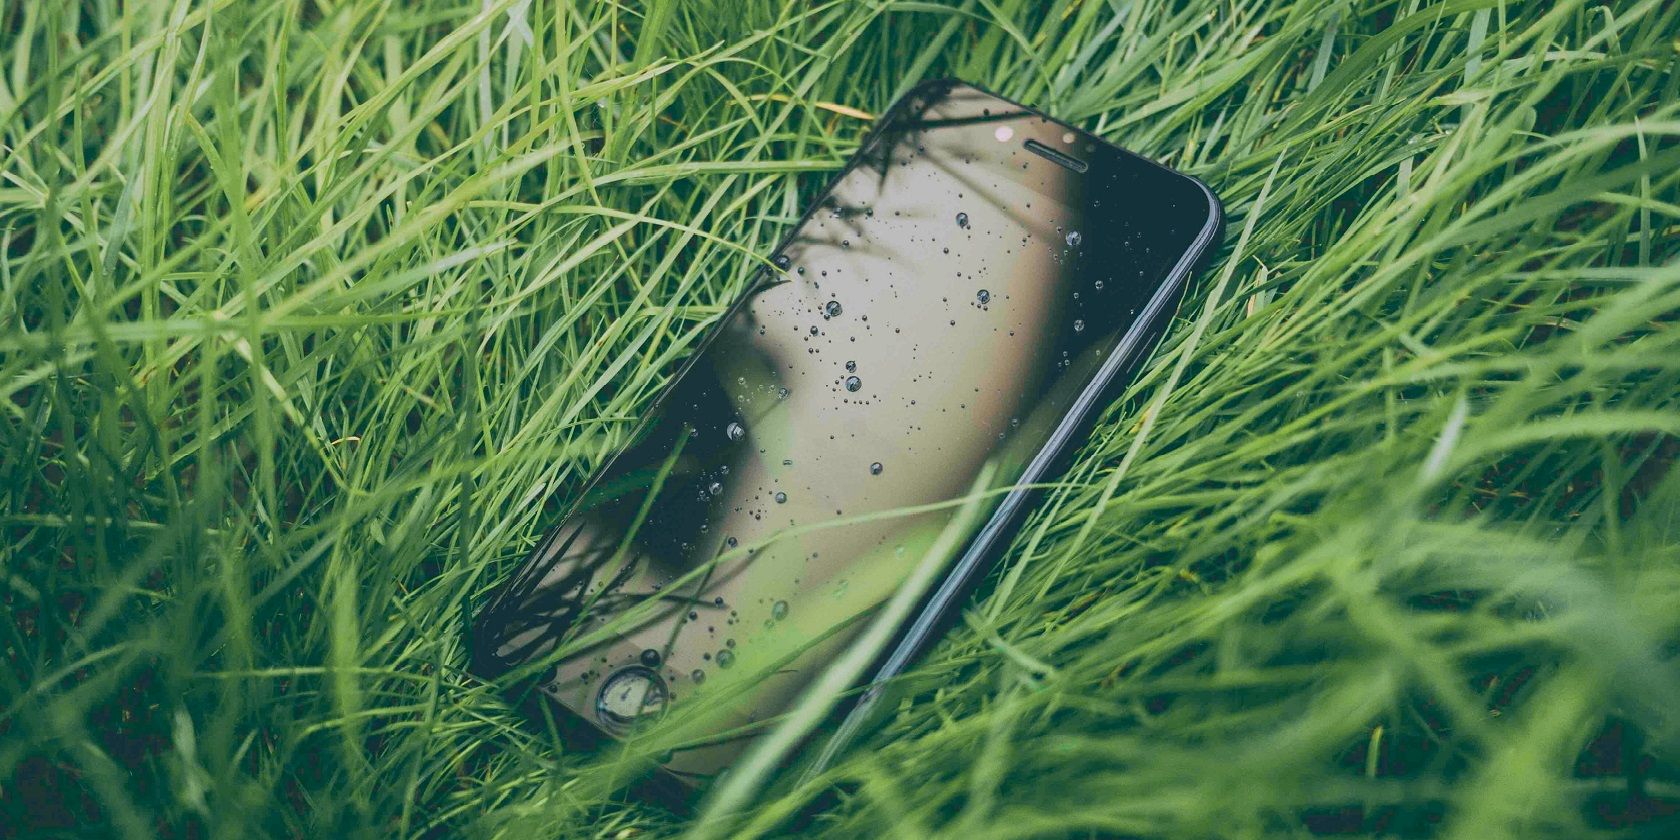 Black iPhone on wet grass.